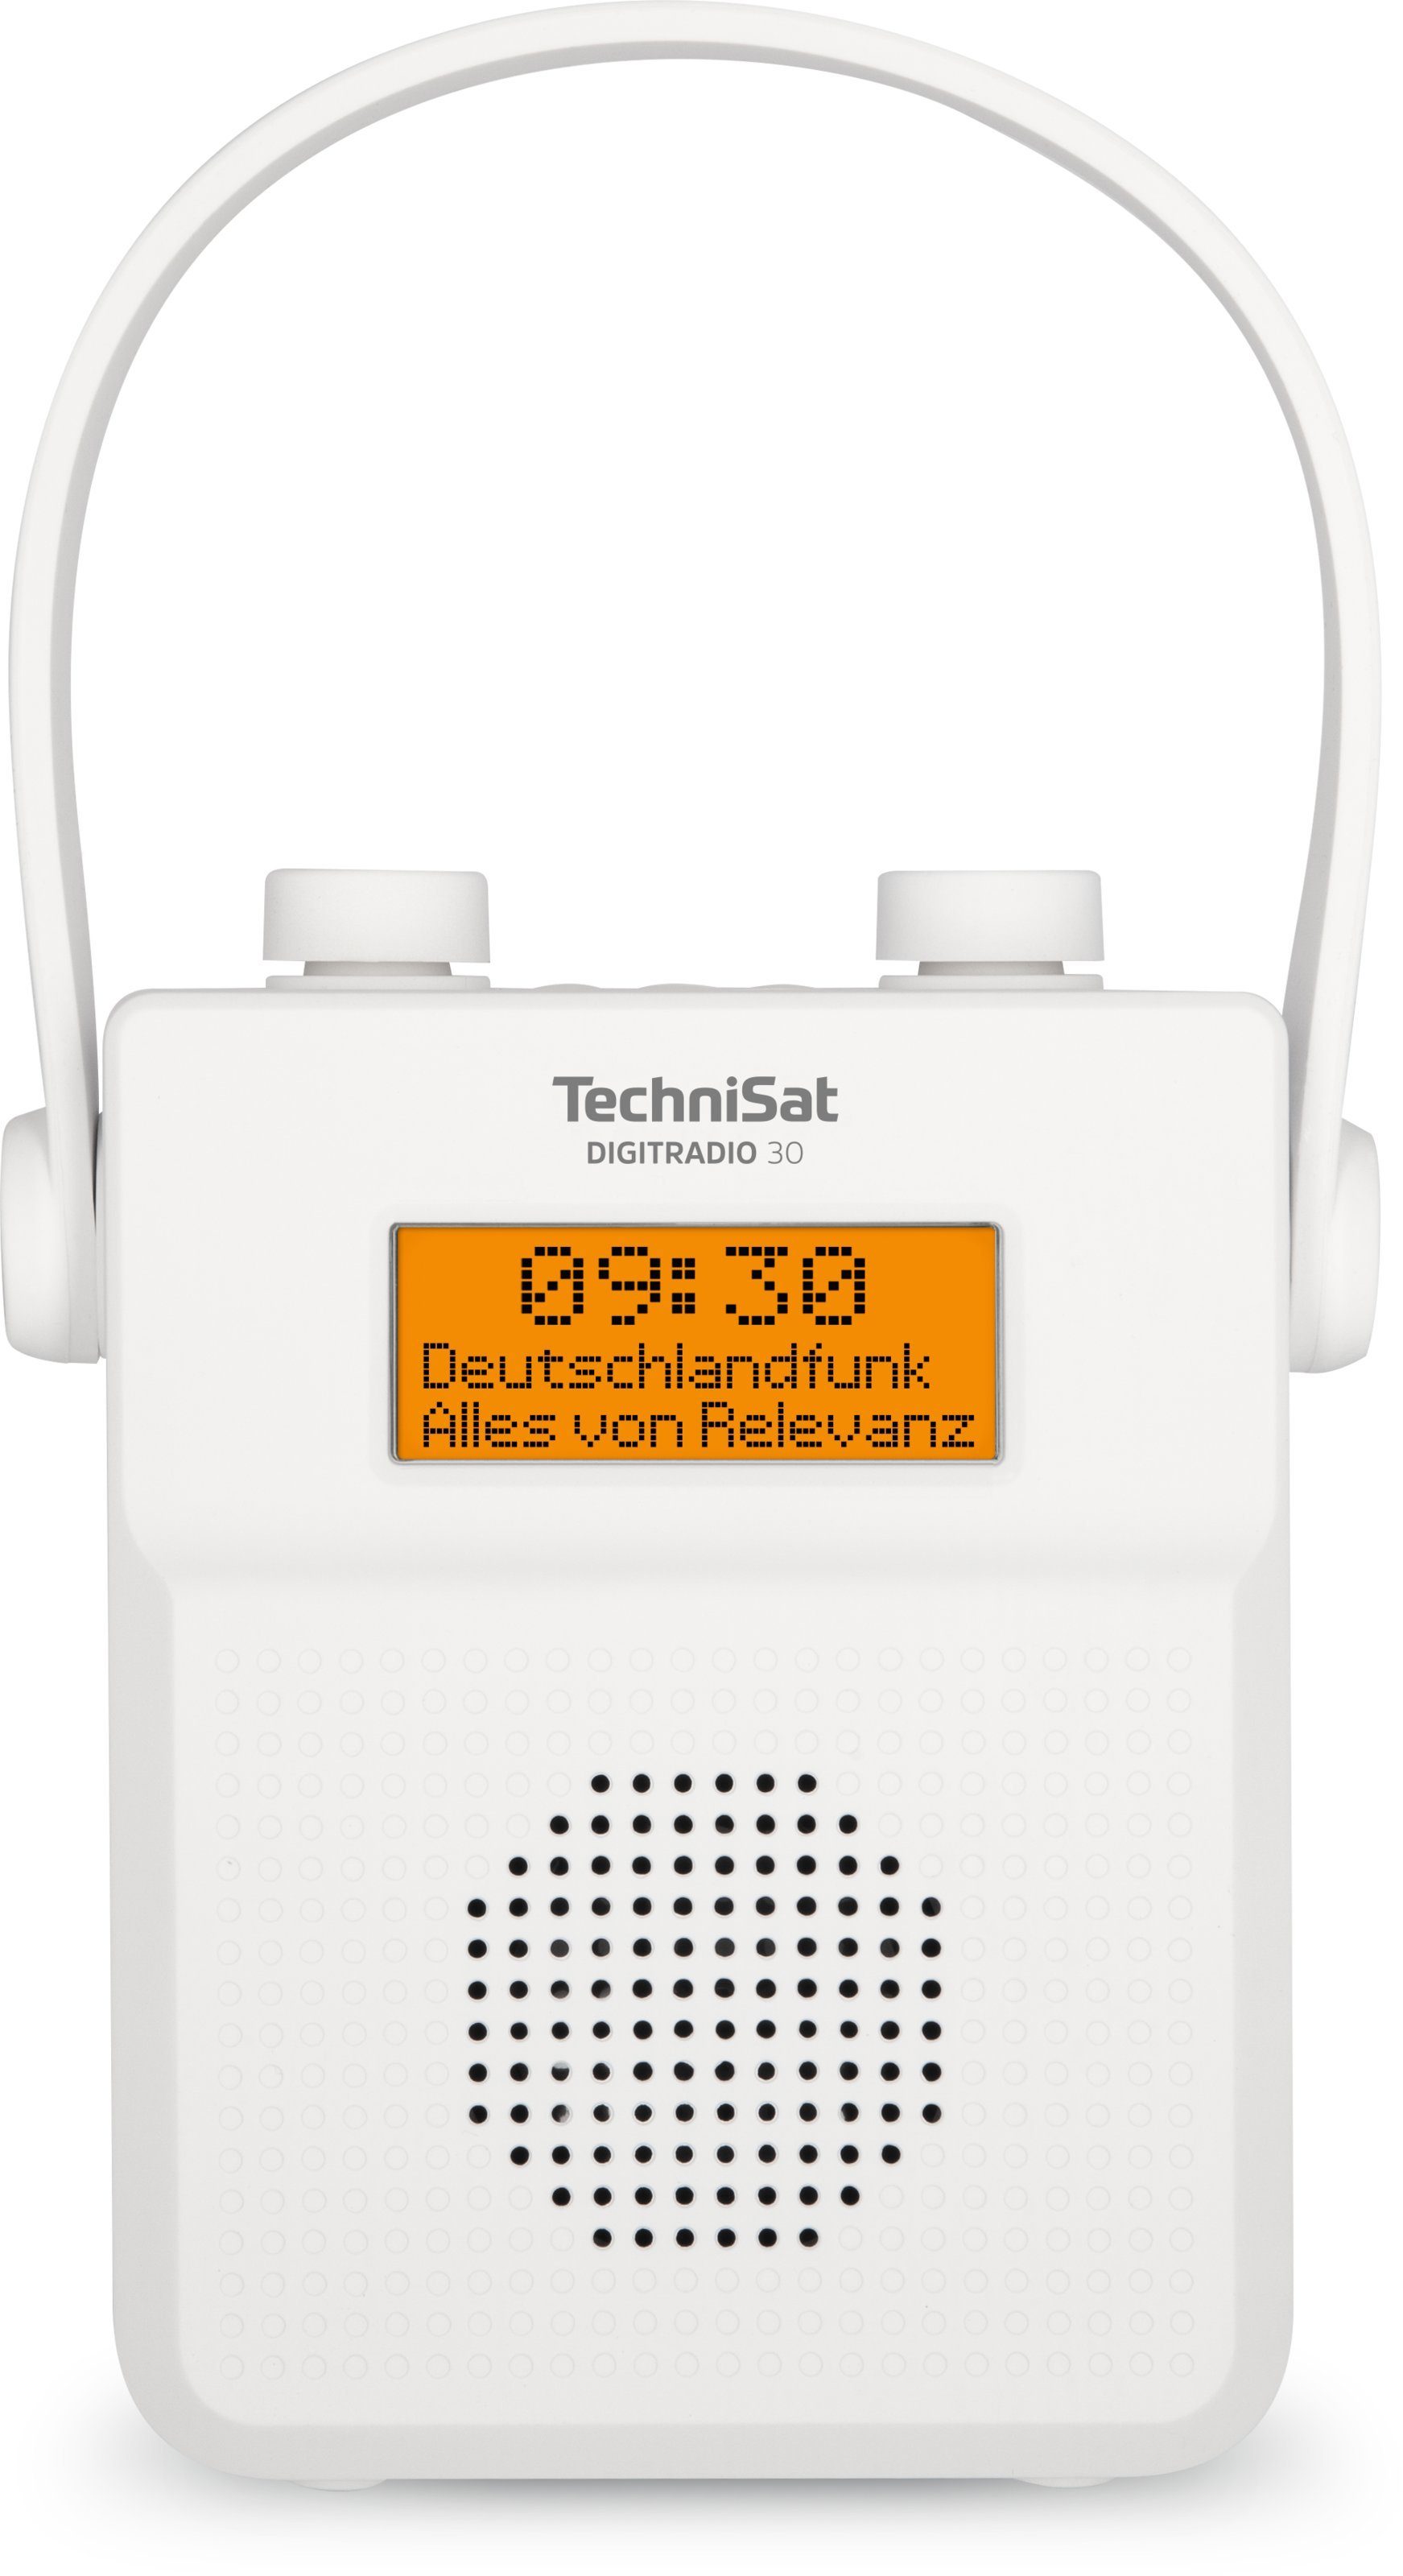 TechniSat DIGITRADIO UKW-Radio (DAB) wasserdicht, Bluetooth-Audiostreaming) Digitalradio 2,00 30 (Digitalradio W, mit weiß Duschradio RDS, (DAB), tragbar